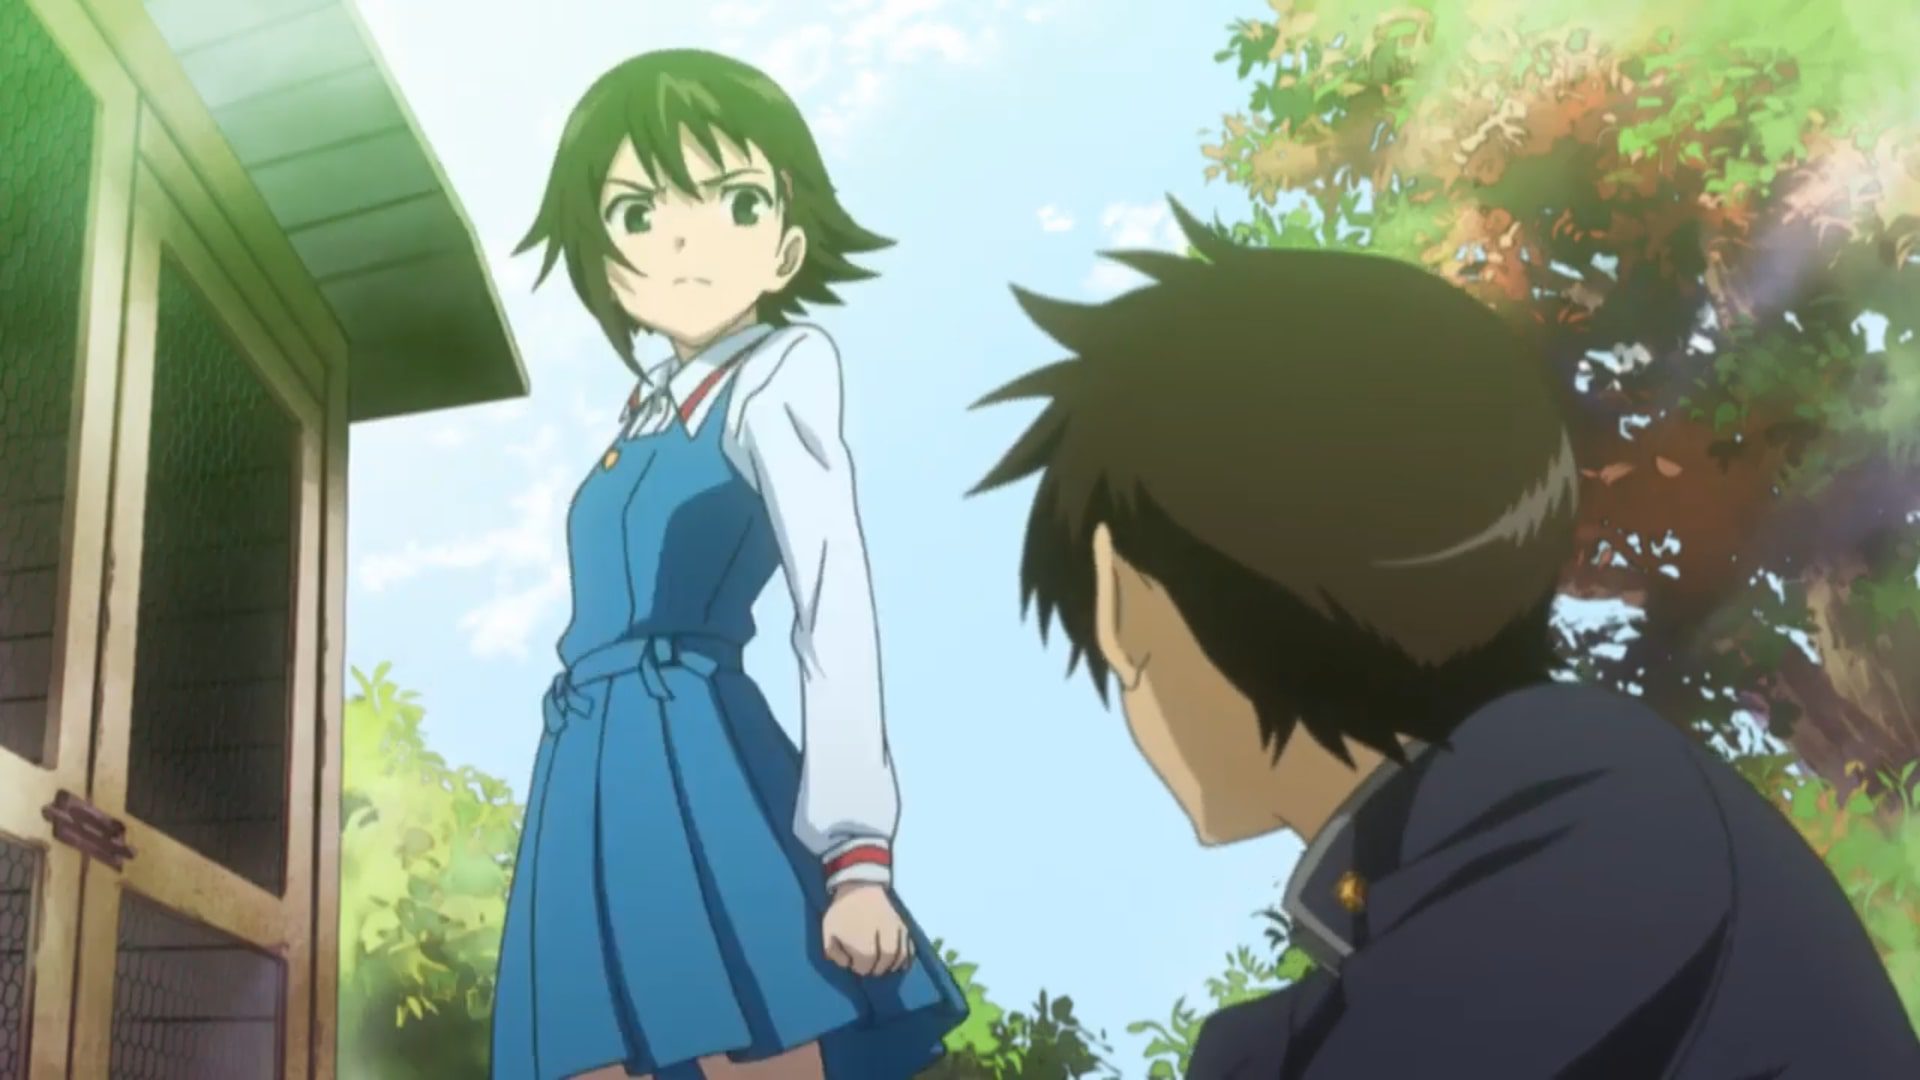 20 Anime Like Domestic Girlfriend That You Should Watch - OtakuKart